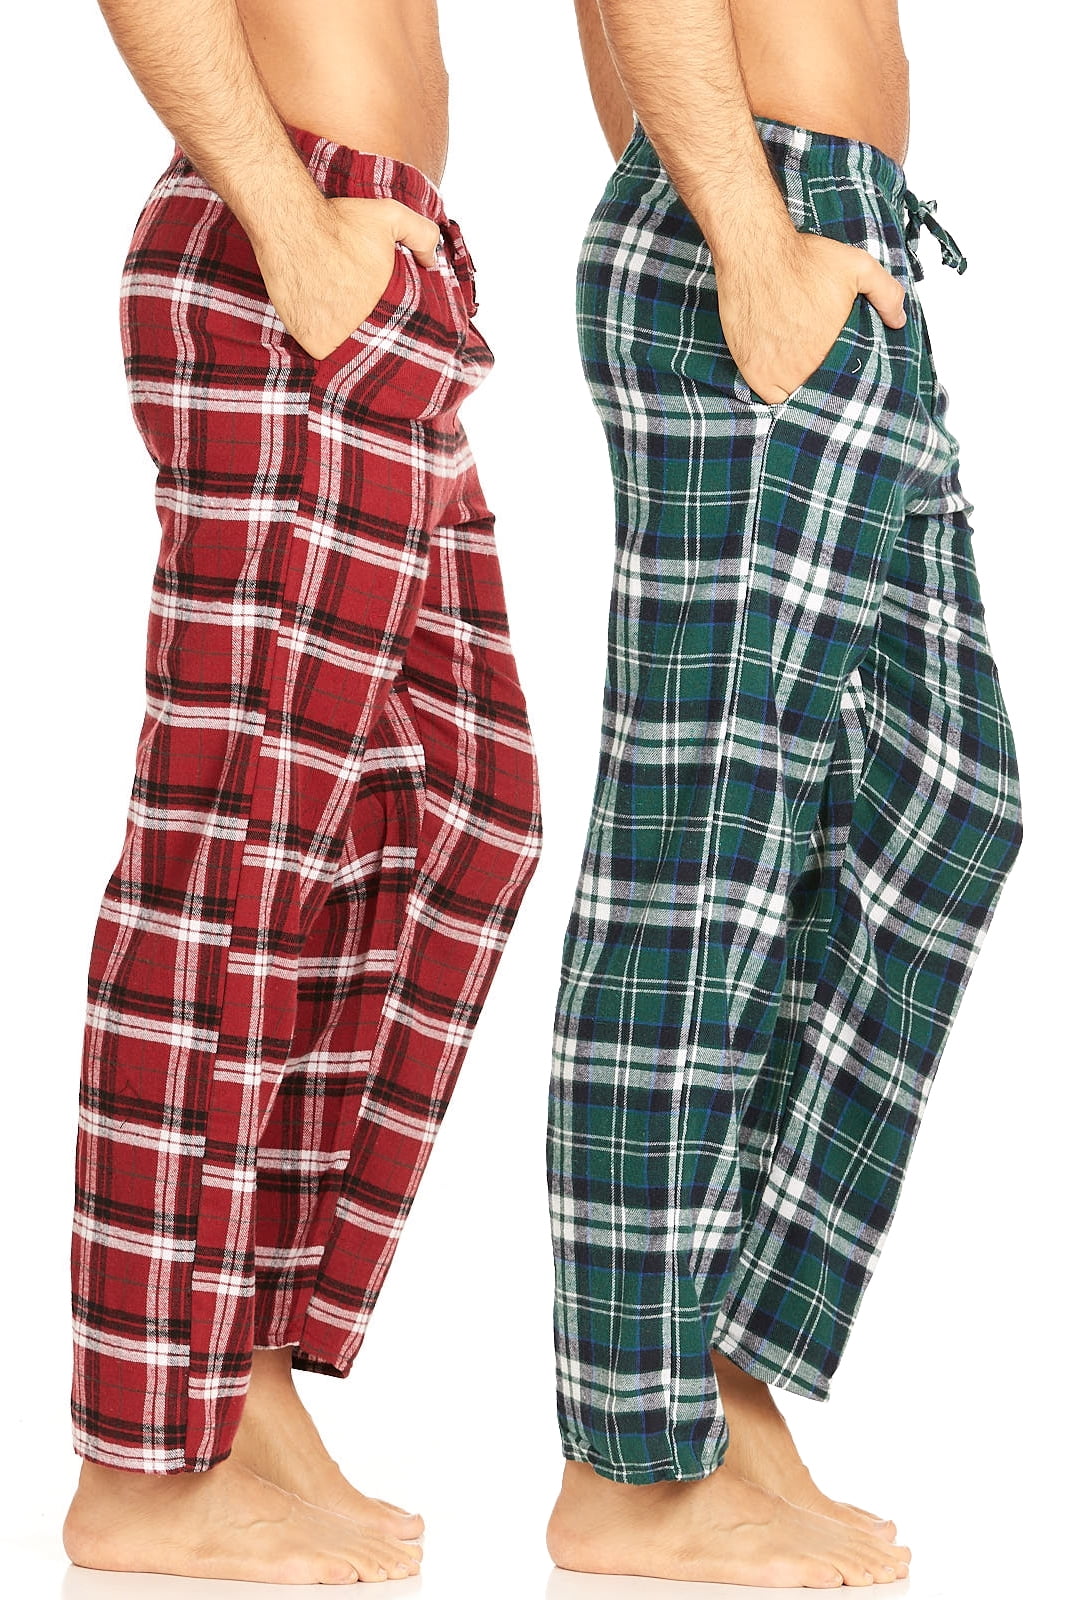 Daresay Mens Cotton Super Soft Flannel Plaid Pajama Pantslounge